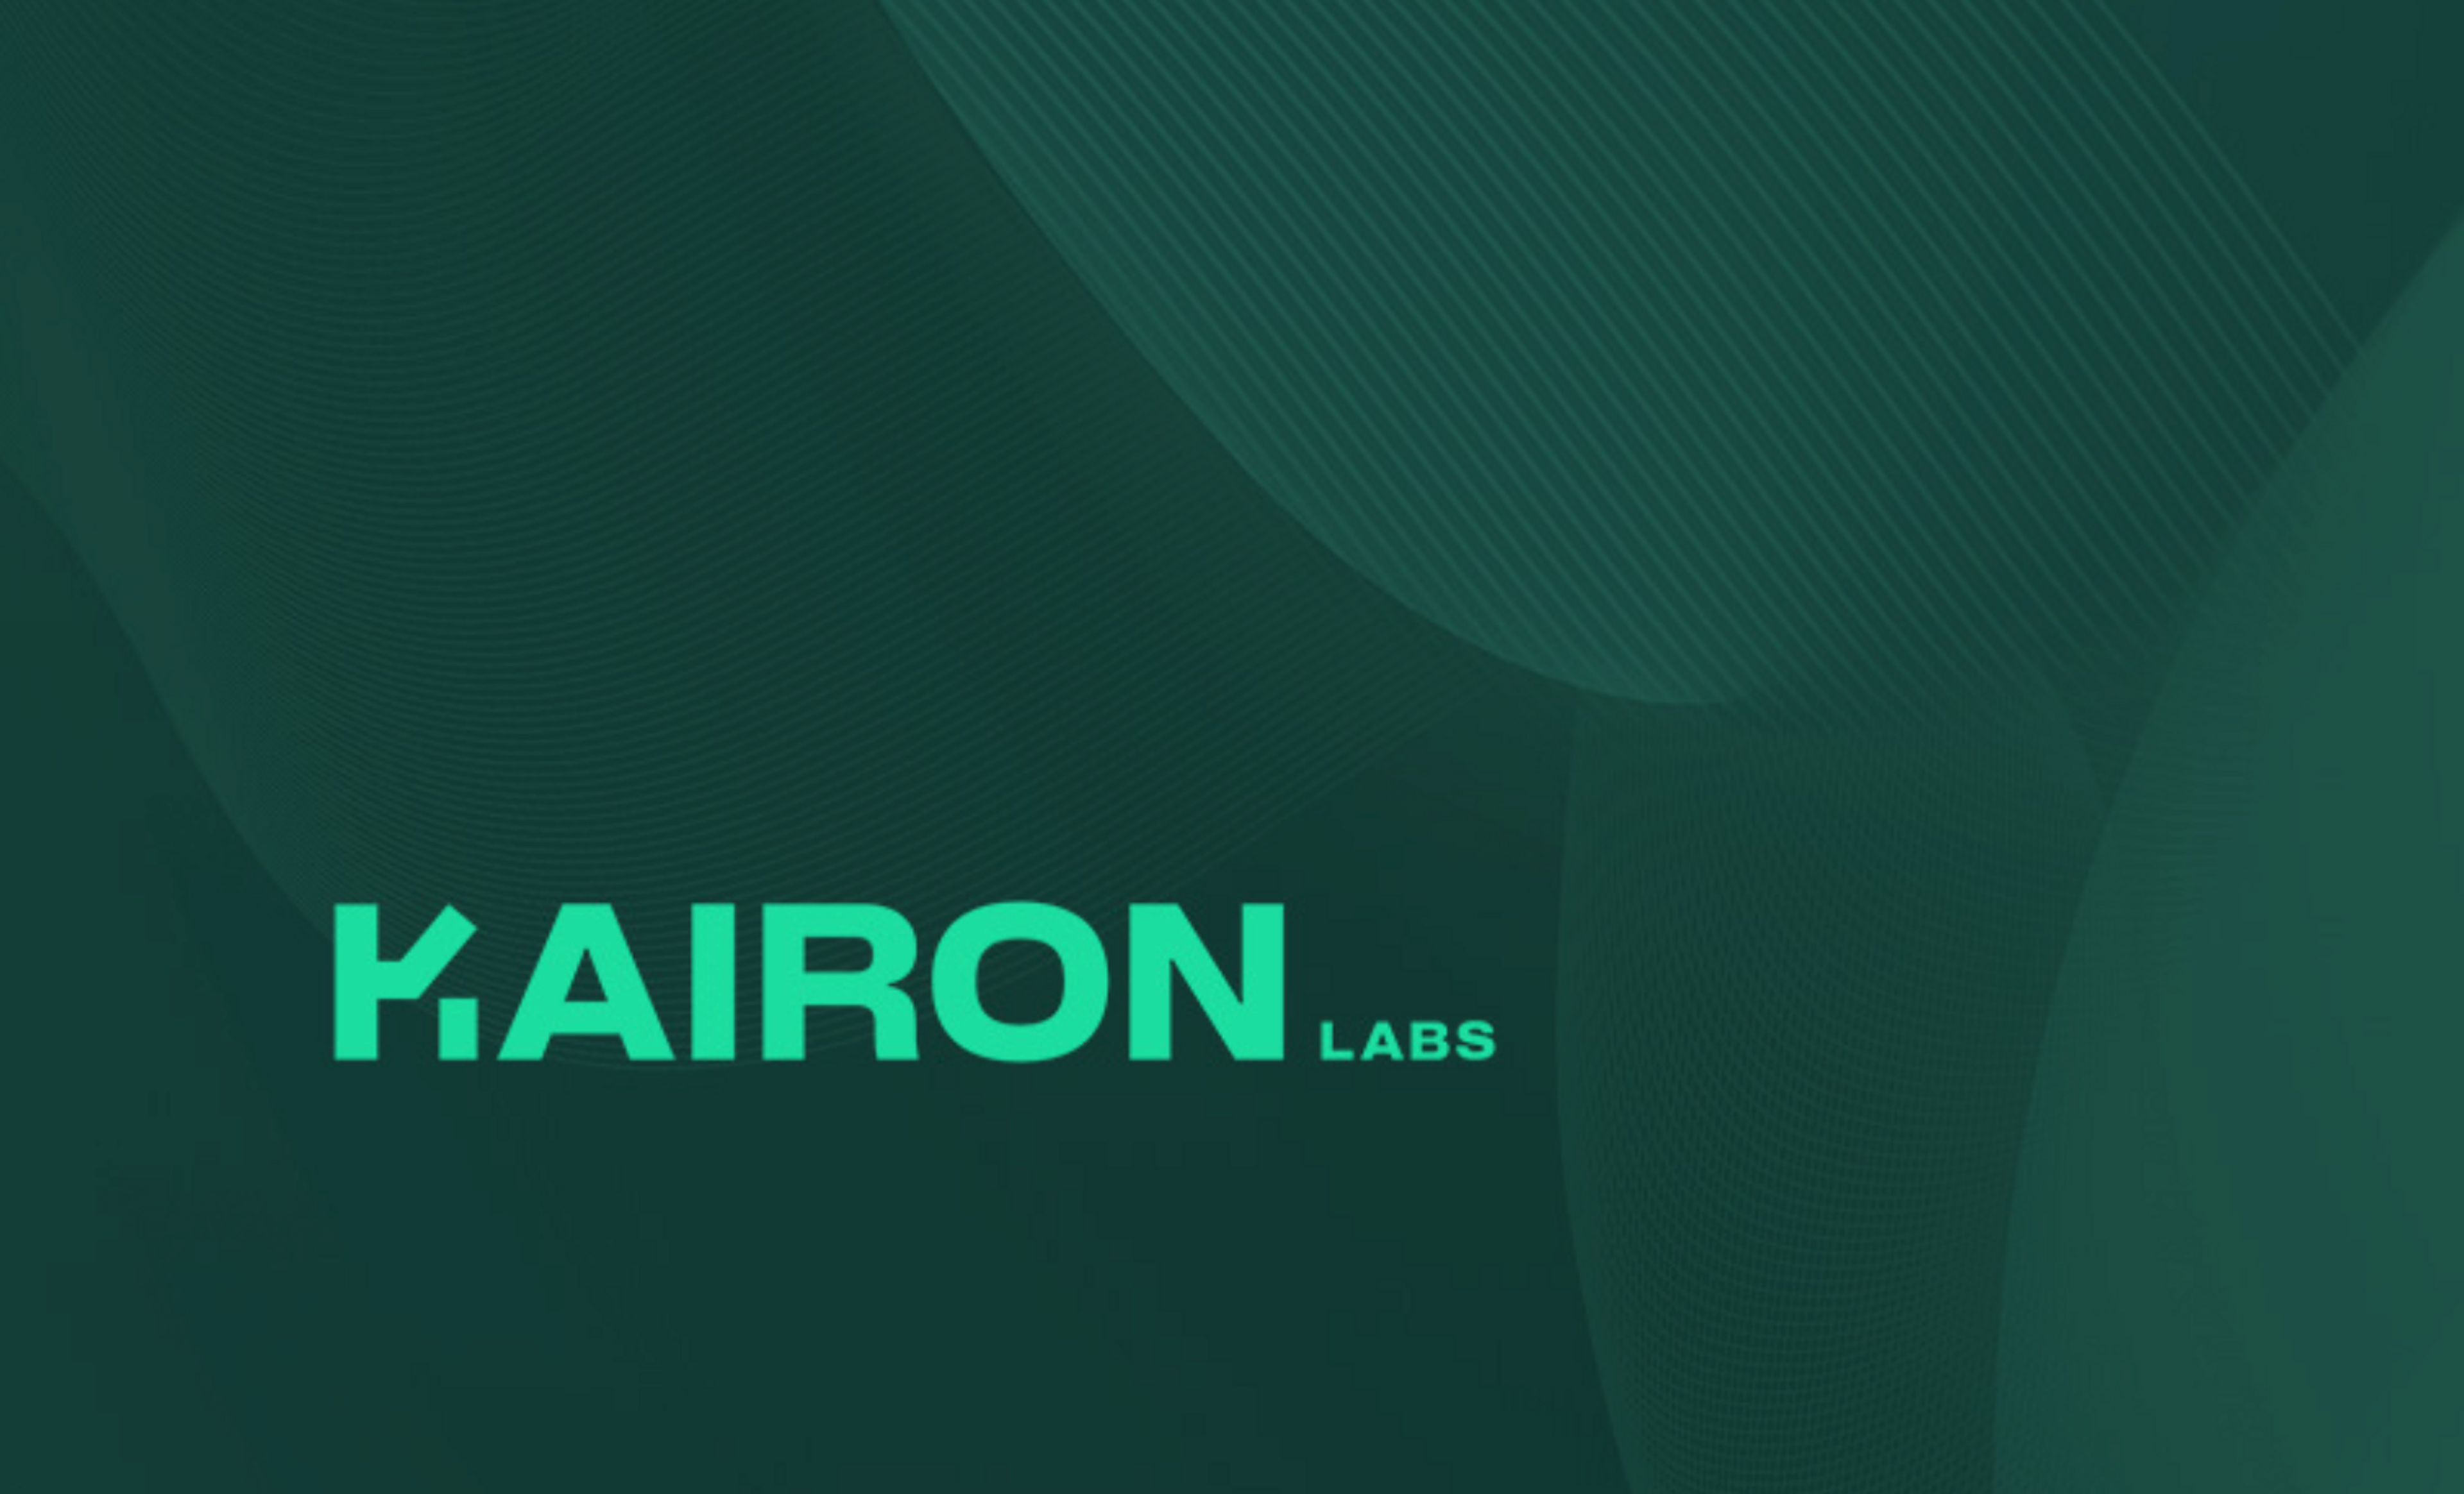 Kairon Labs Reveals new BRAND LOOK